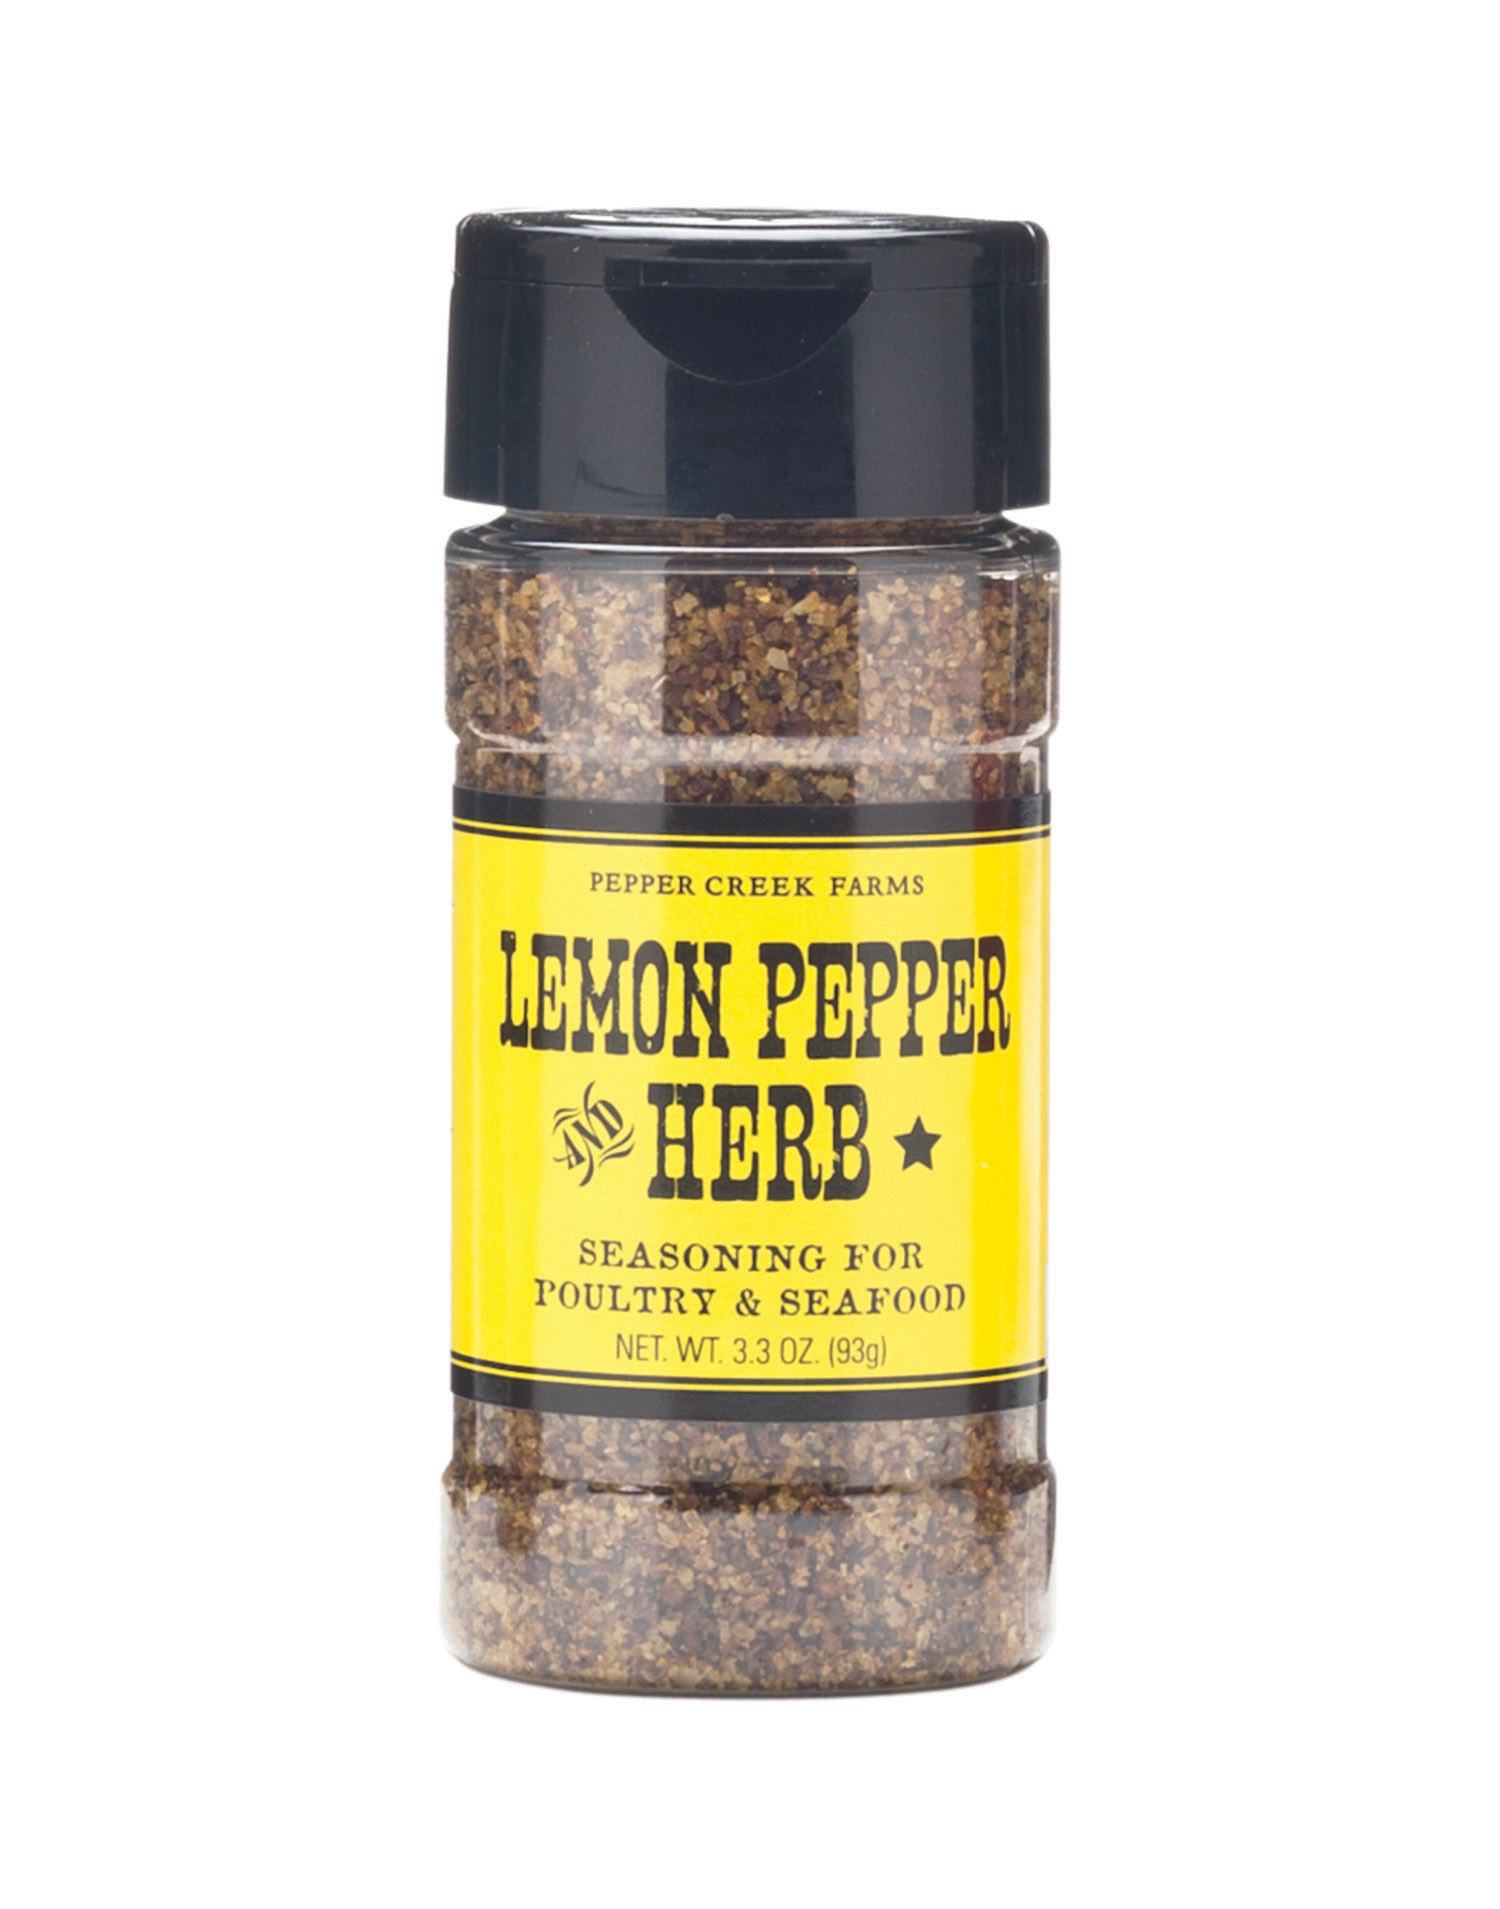 https://peppercreekfarms.com/wp-content/uploads/2017/08/Lemon-Pepper-Herbs.jpg